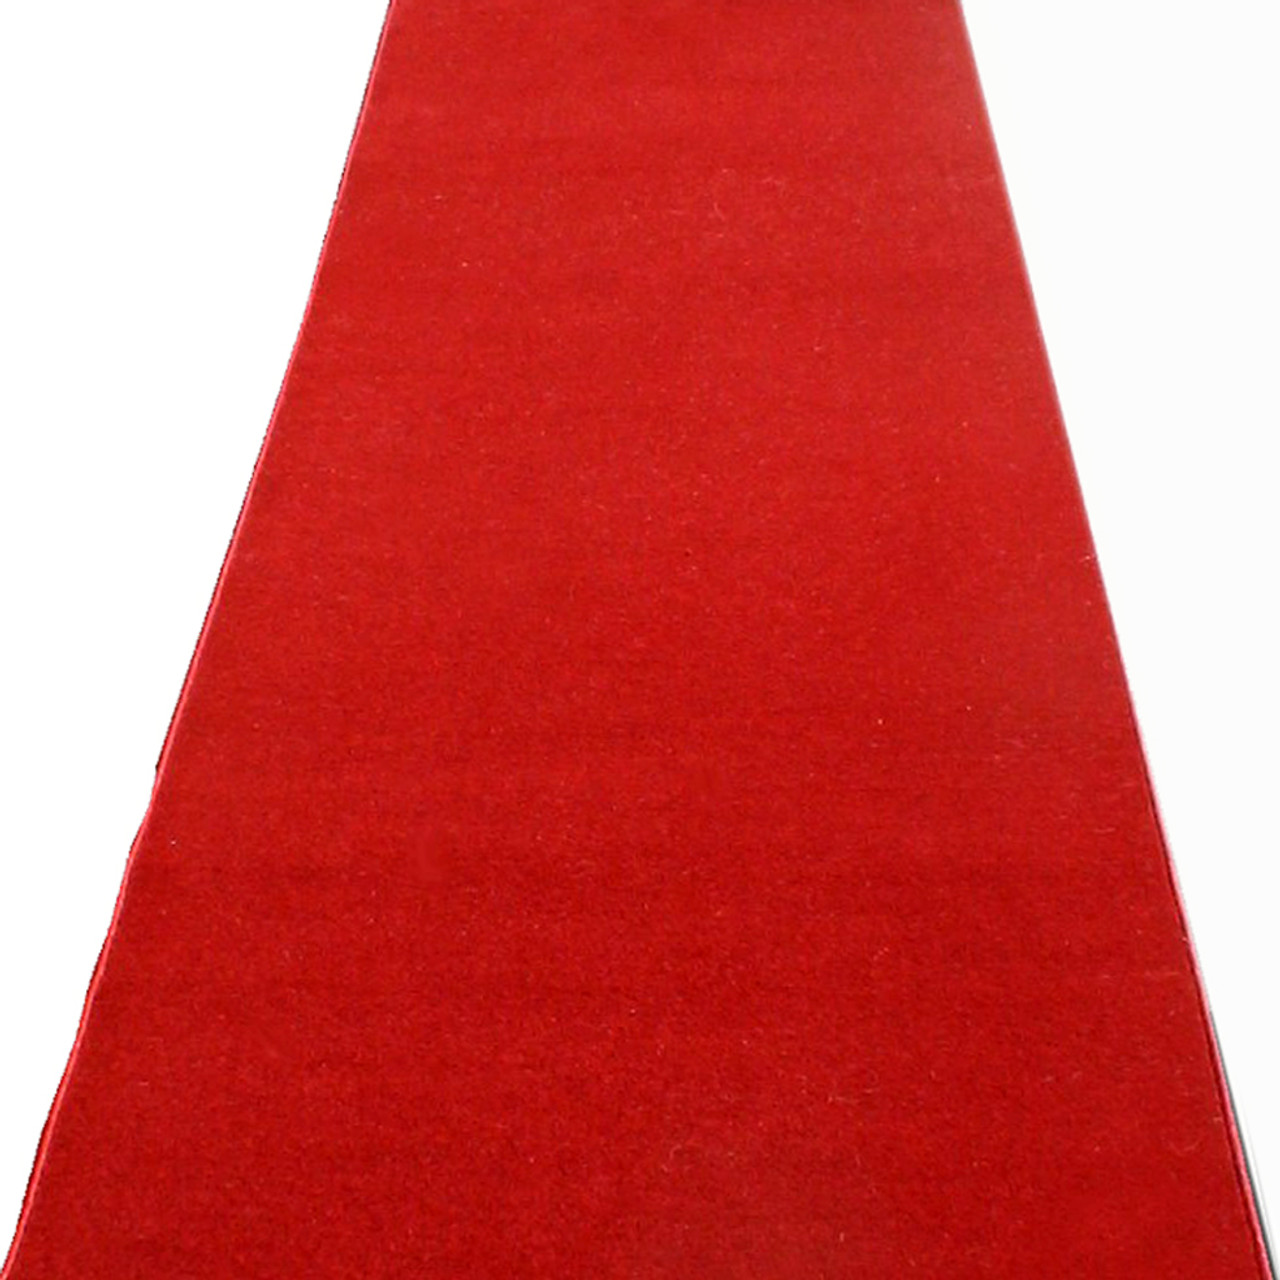 Red Carpet    1.2m x 6m